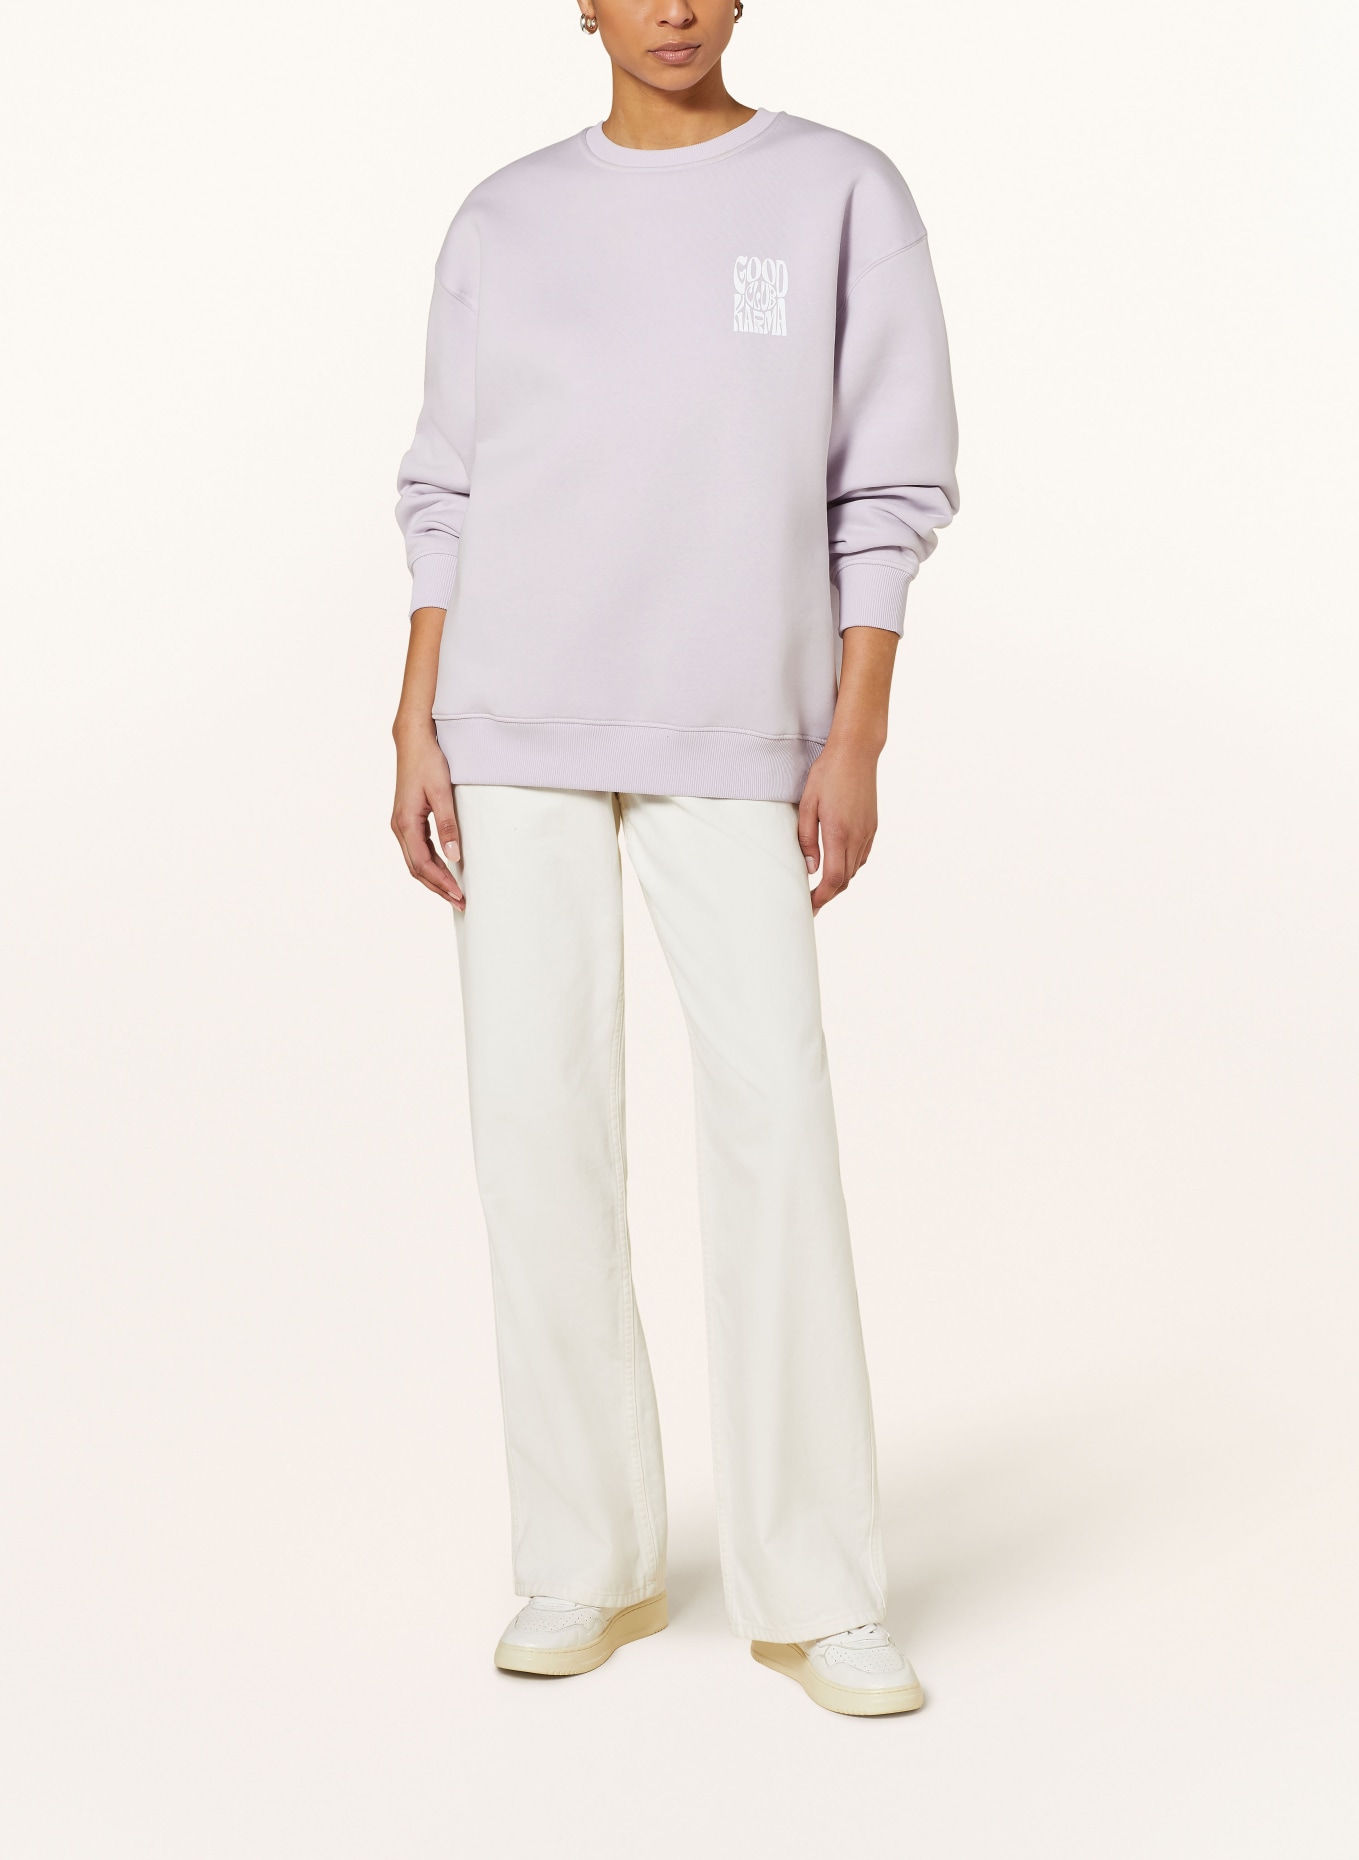 OH APRIL Oversized sweatshirt GOOD KARMA CLUB, Color: LIGHT PURPLE/ WHITE (Image 3)